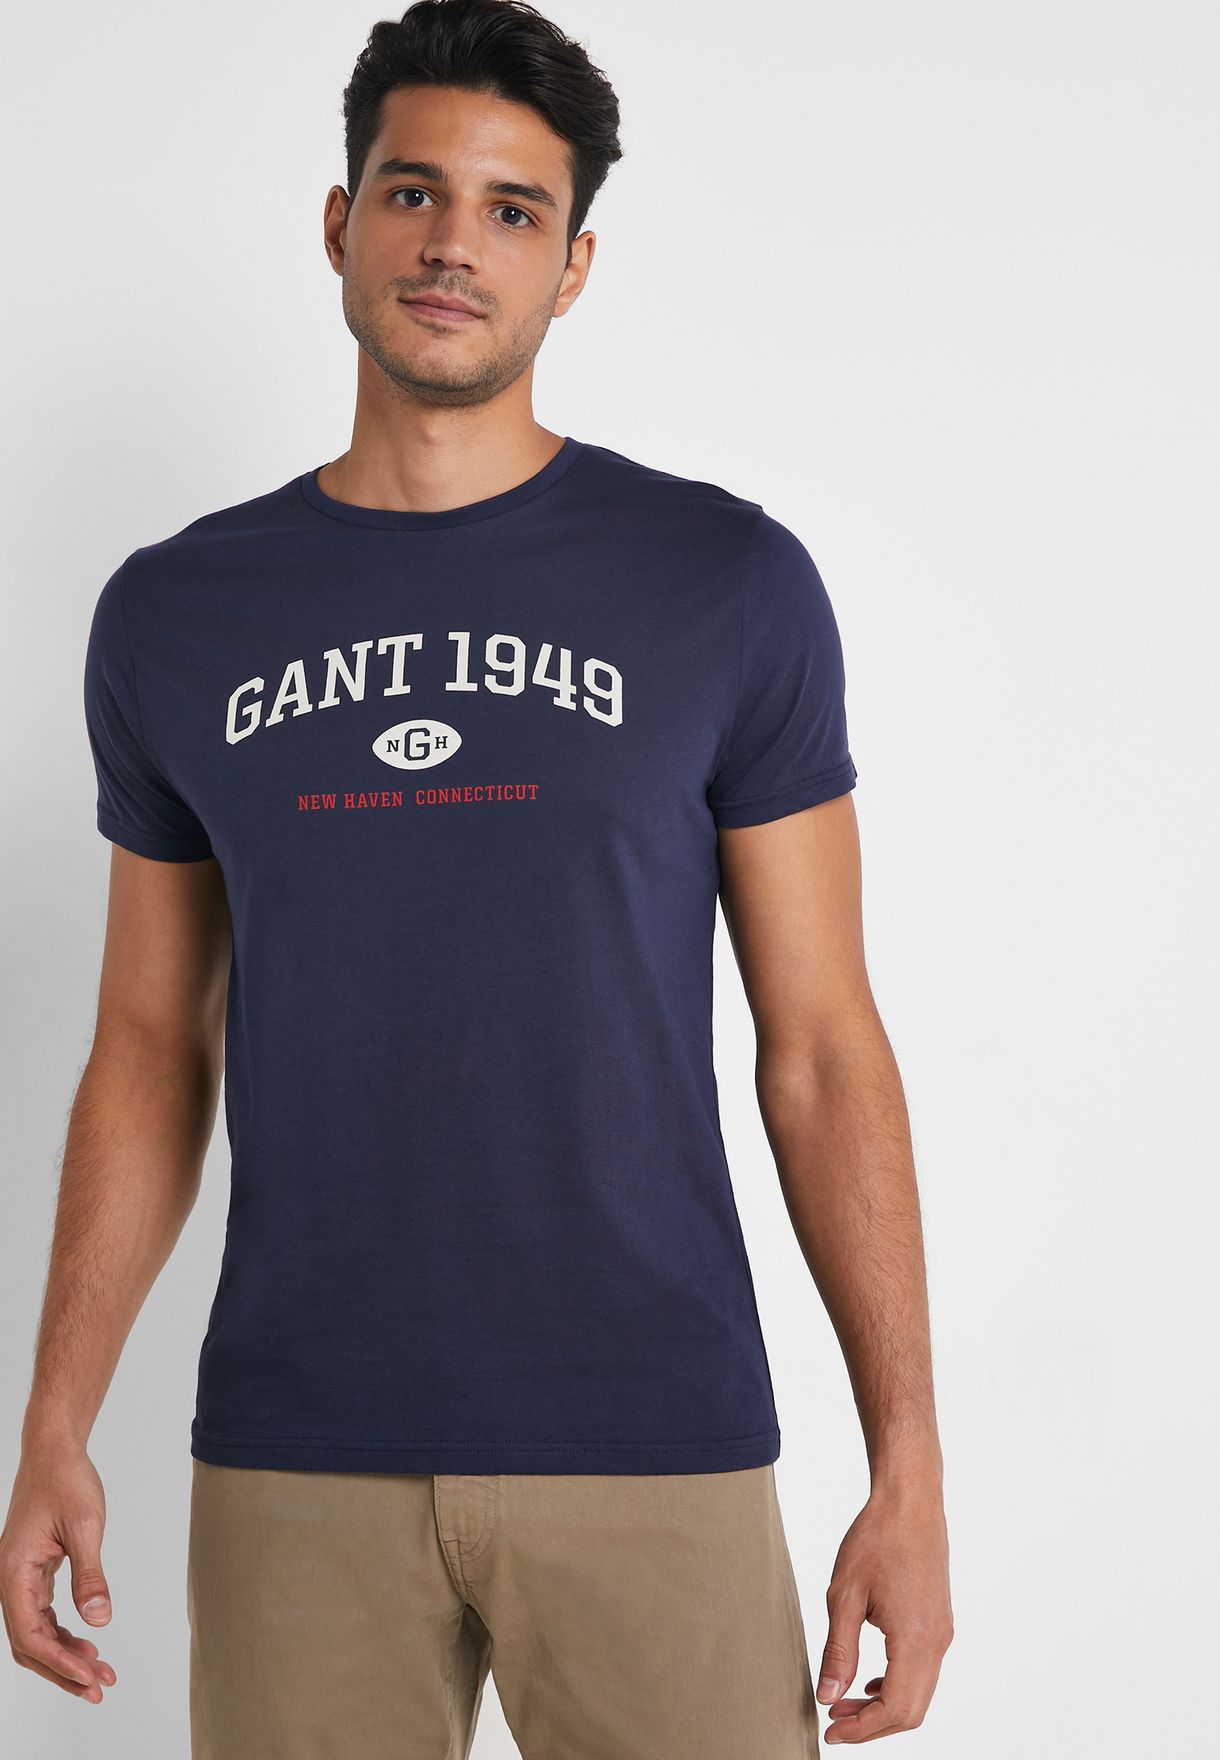 Gant Men Crew neck Short Sleeve Cotton Logo Navy Blue T shirt Tee M L XL 2XL